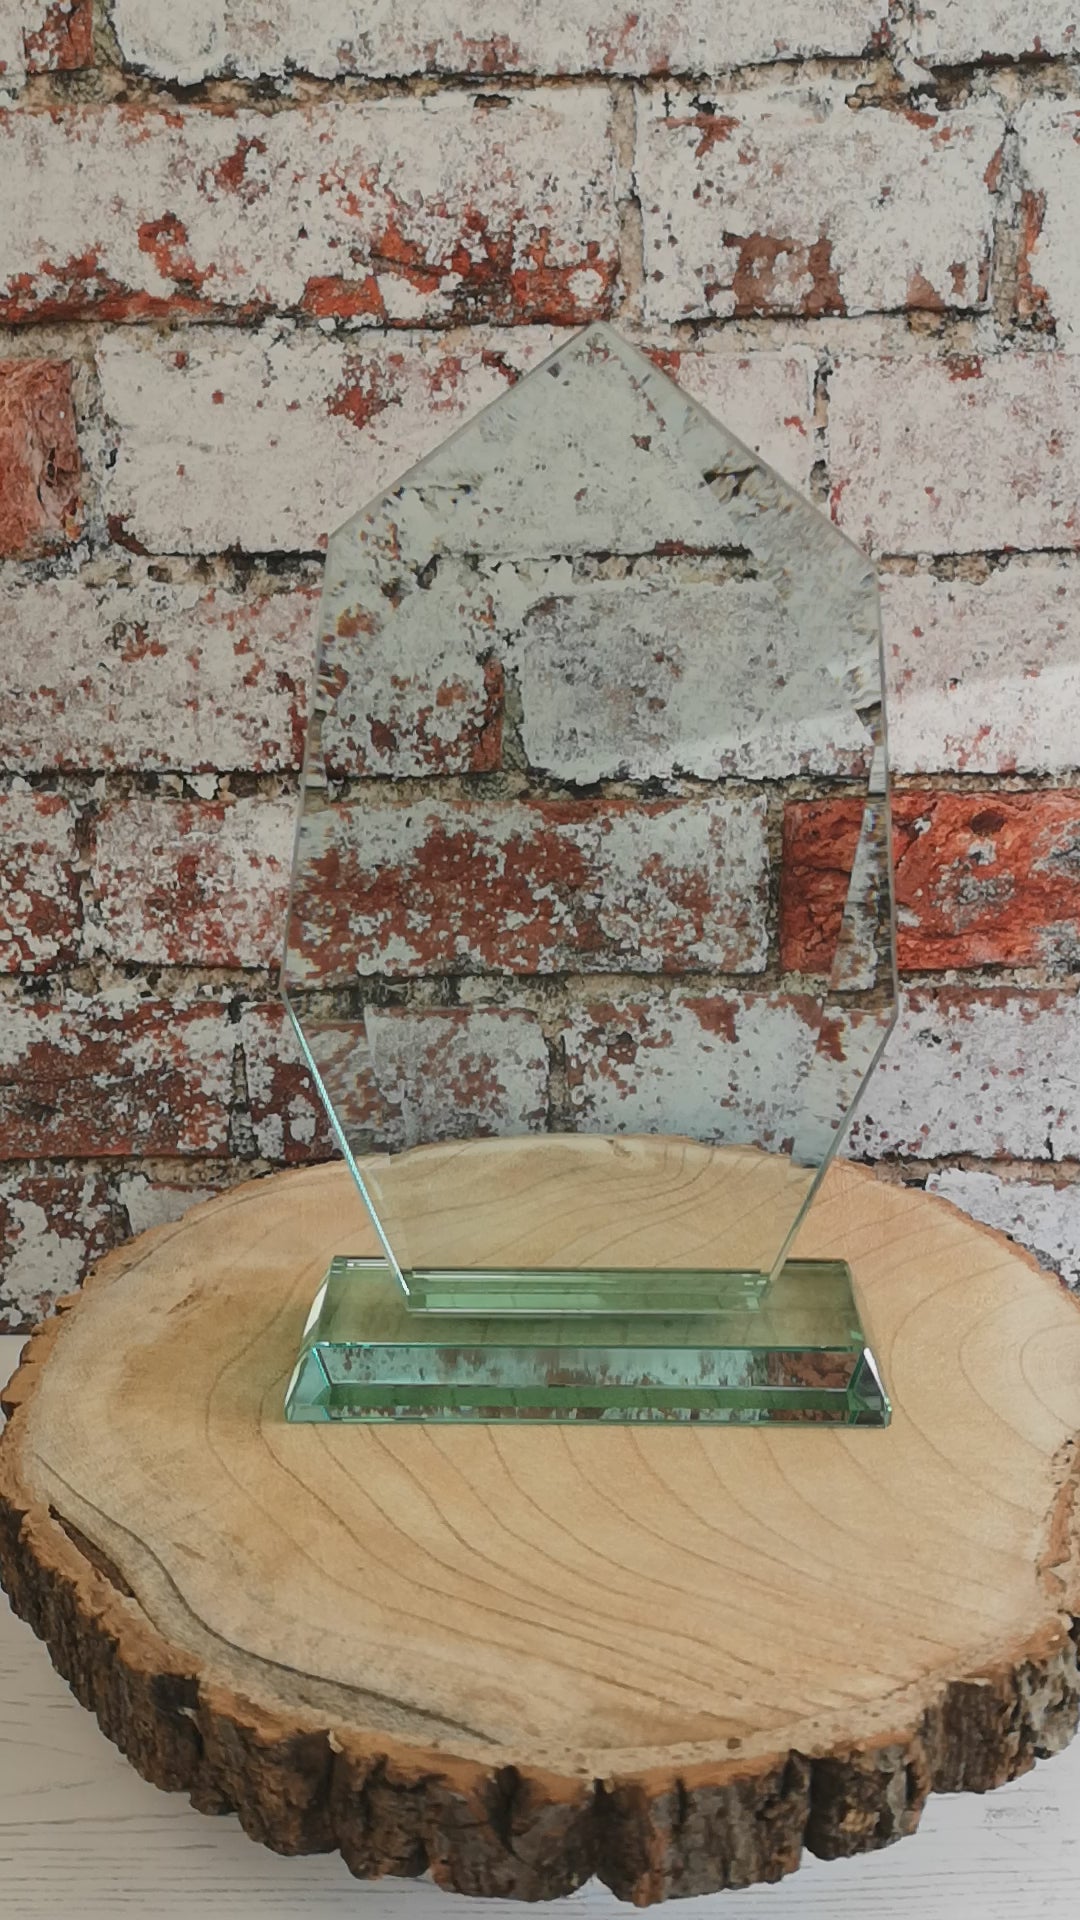 Innovate Jade Glass Thank You Award